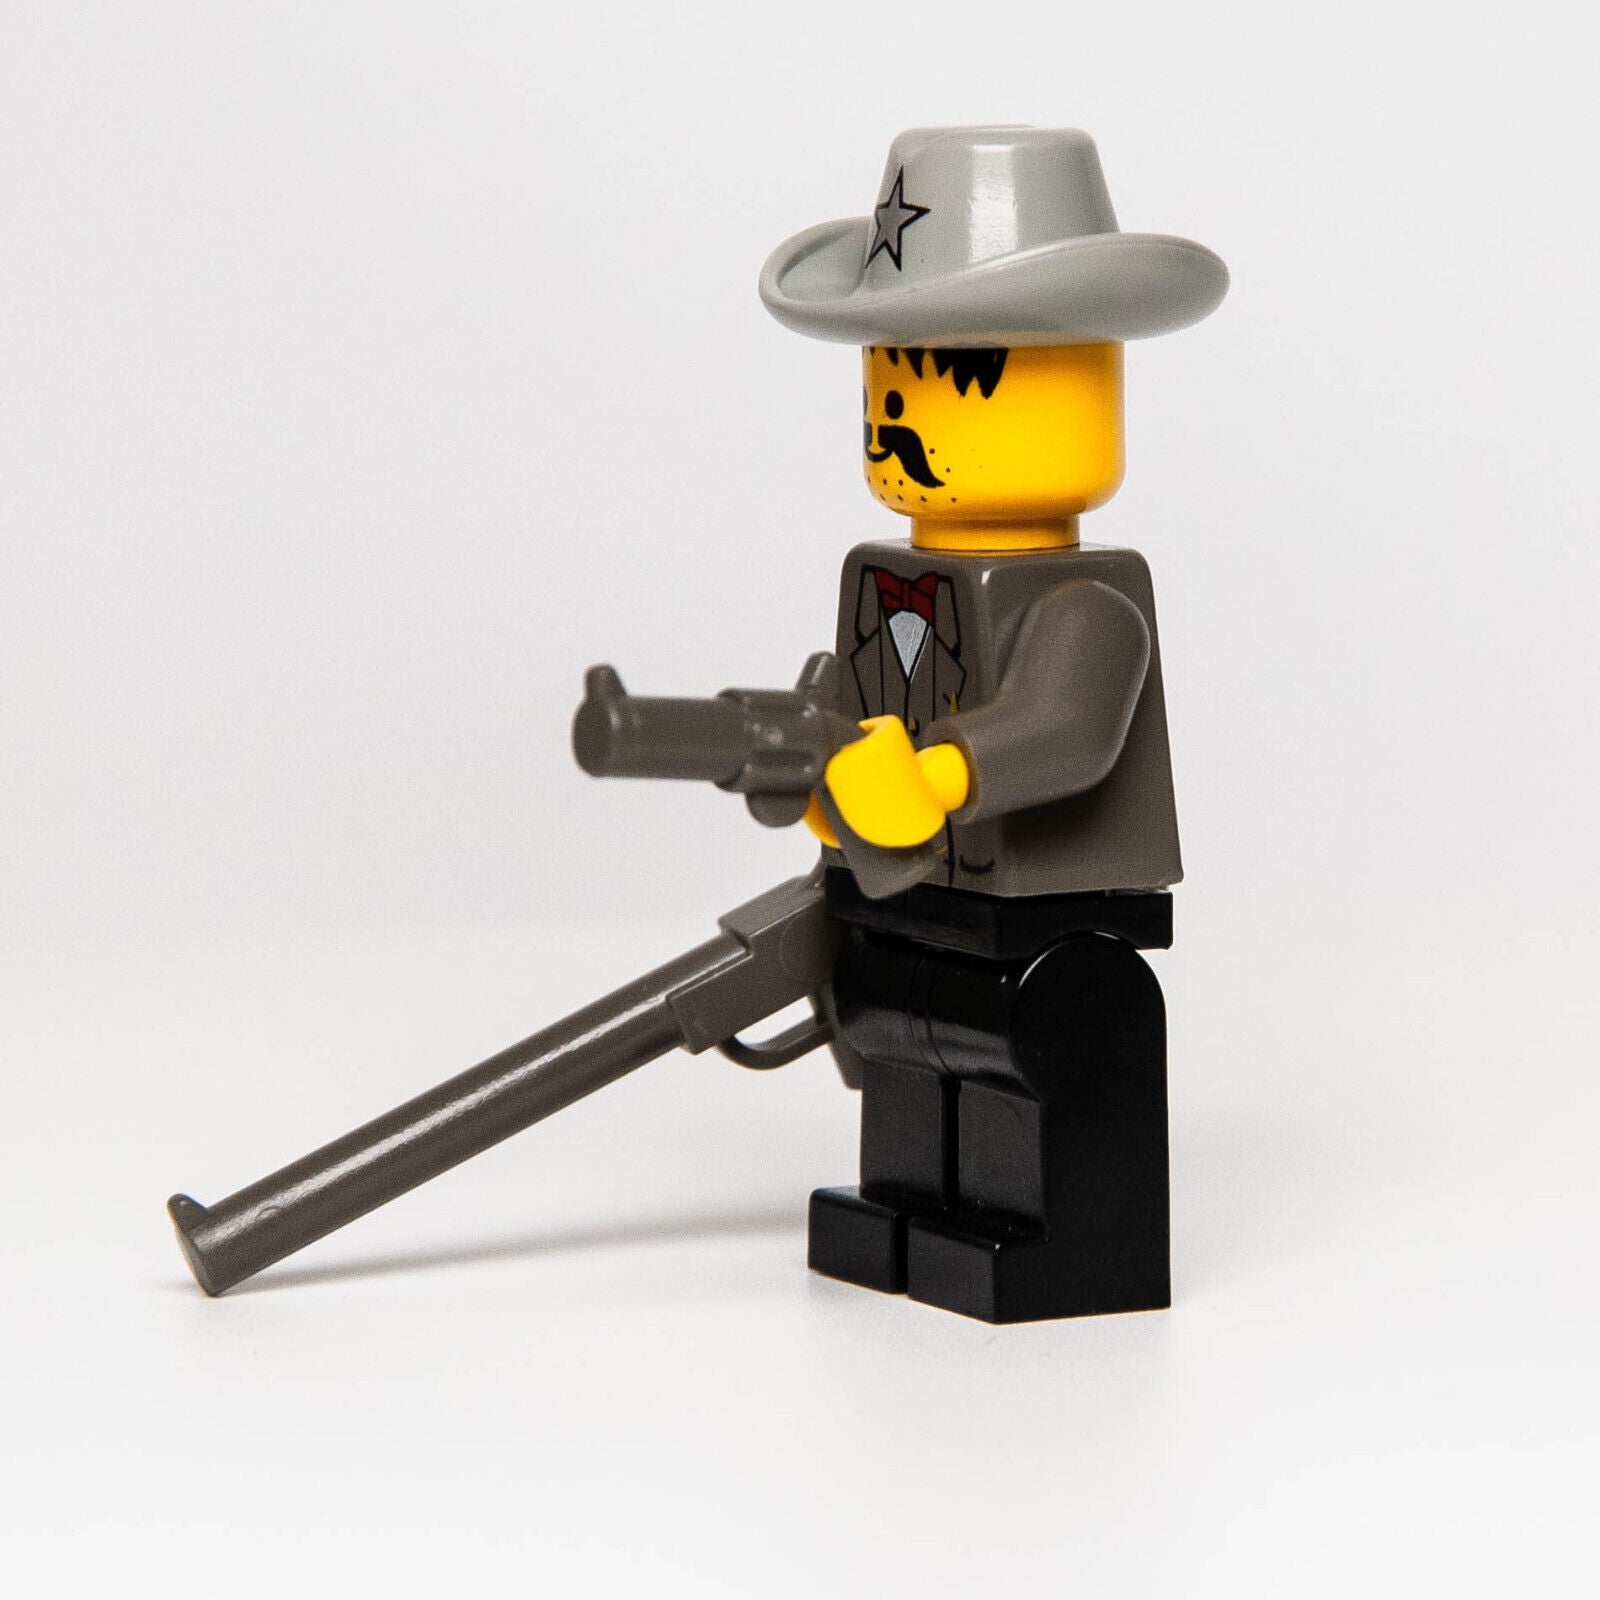 LEGO Western Cowboy SHERIFF Minifigure with Rifle and Revolver (ww021)